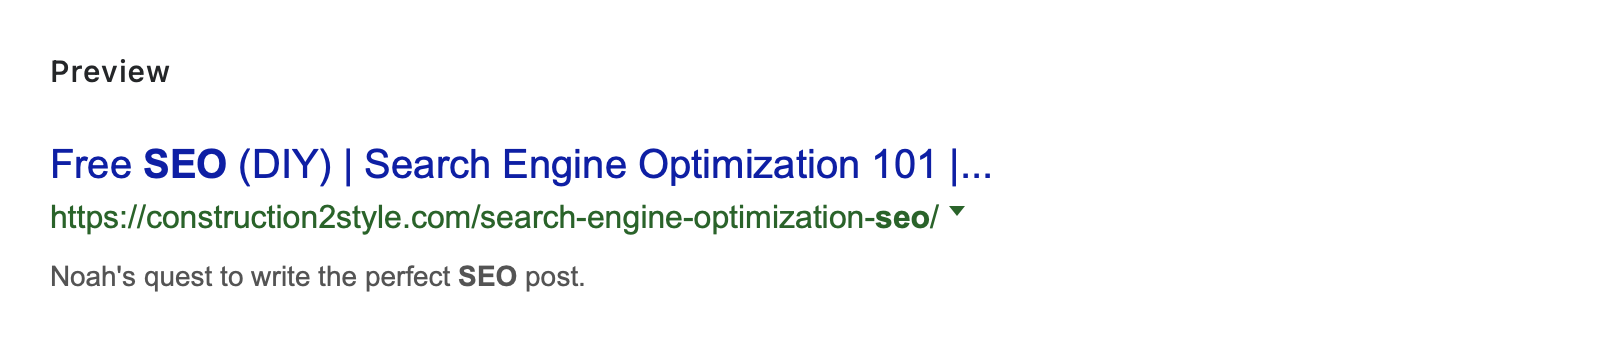 Free SEO (DIY) | Search Engine Optimization 101